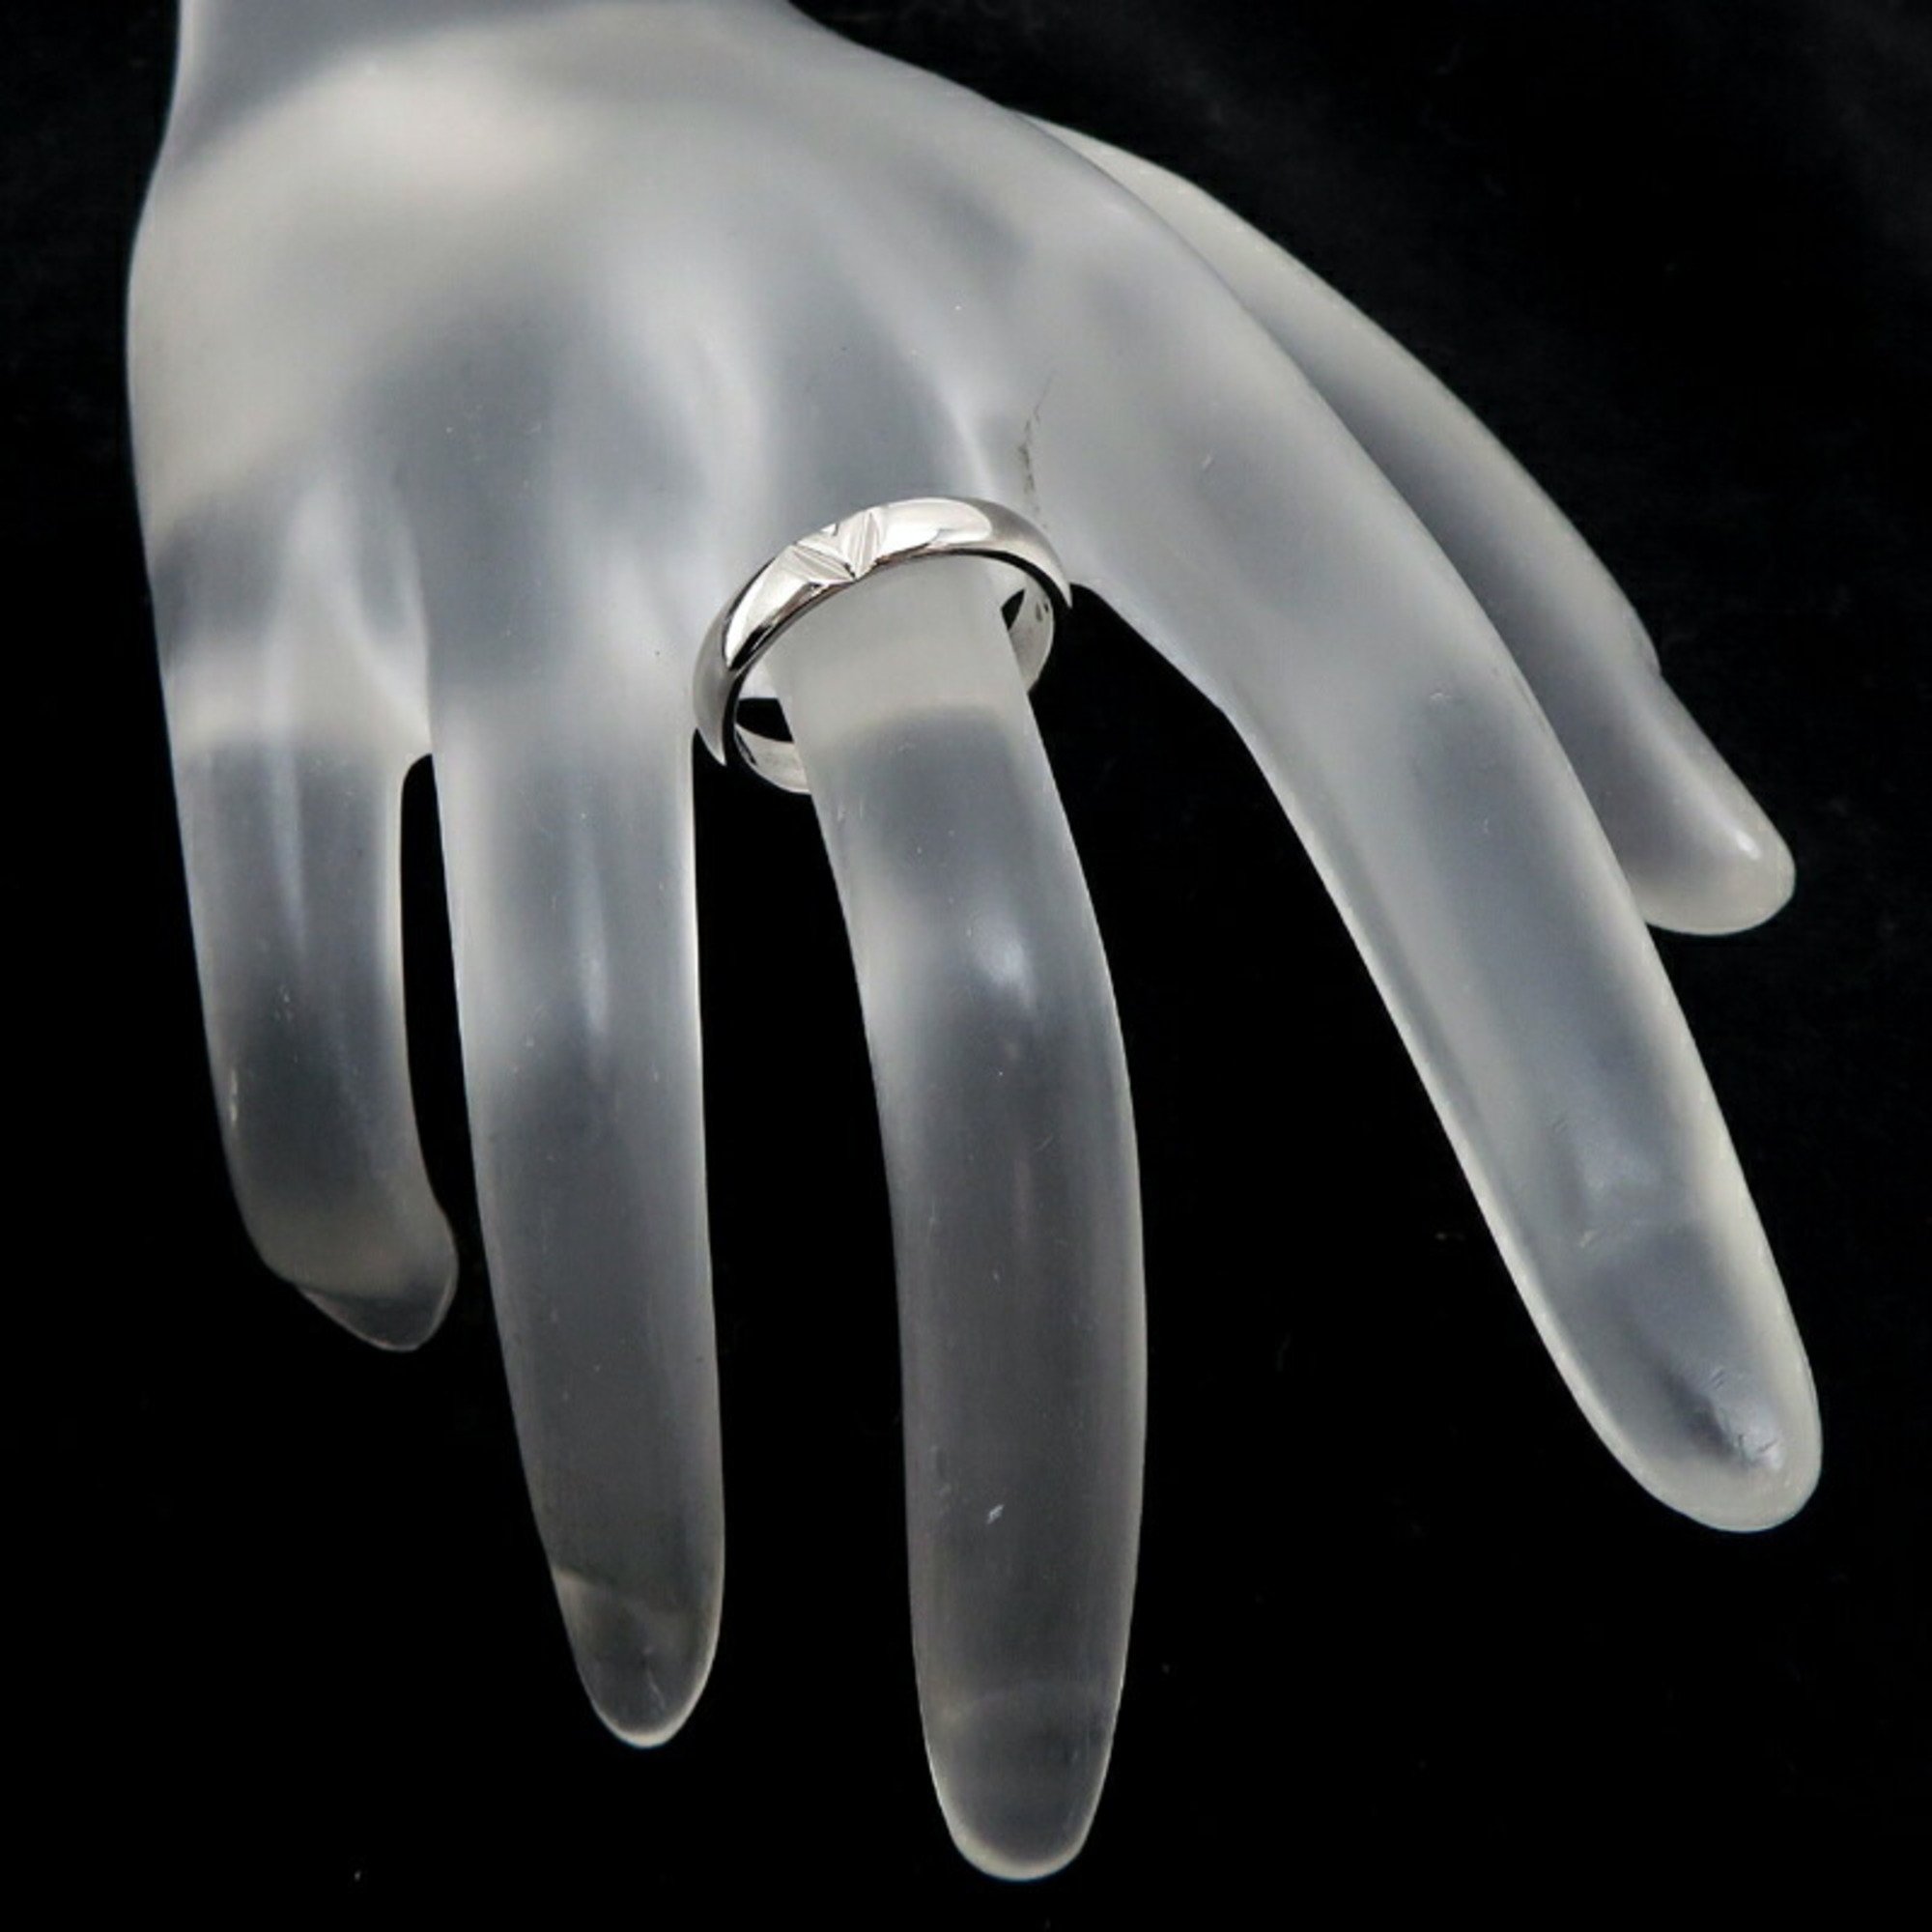 Louis Vuitton #49 LV Voltmulty Marriage Women's Ring Q9061K 750 White Gold Size 9